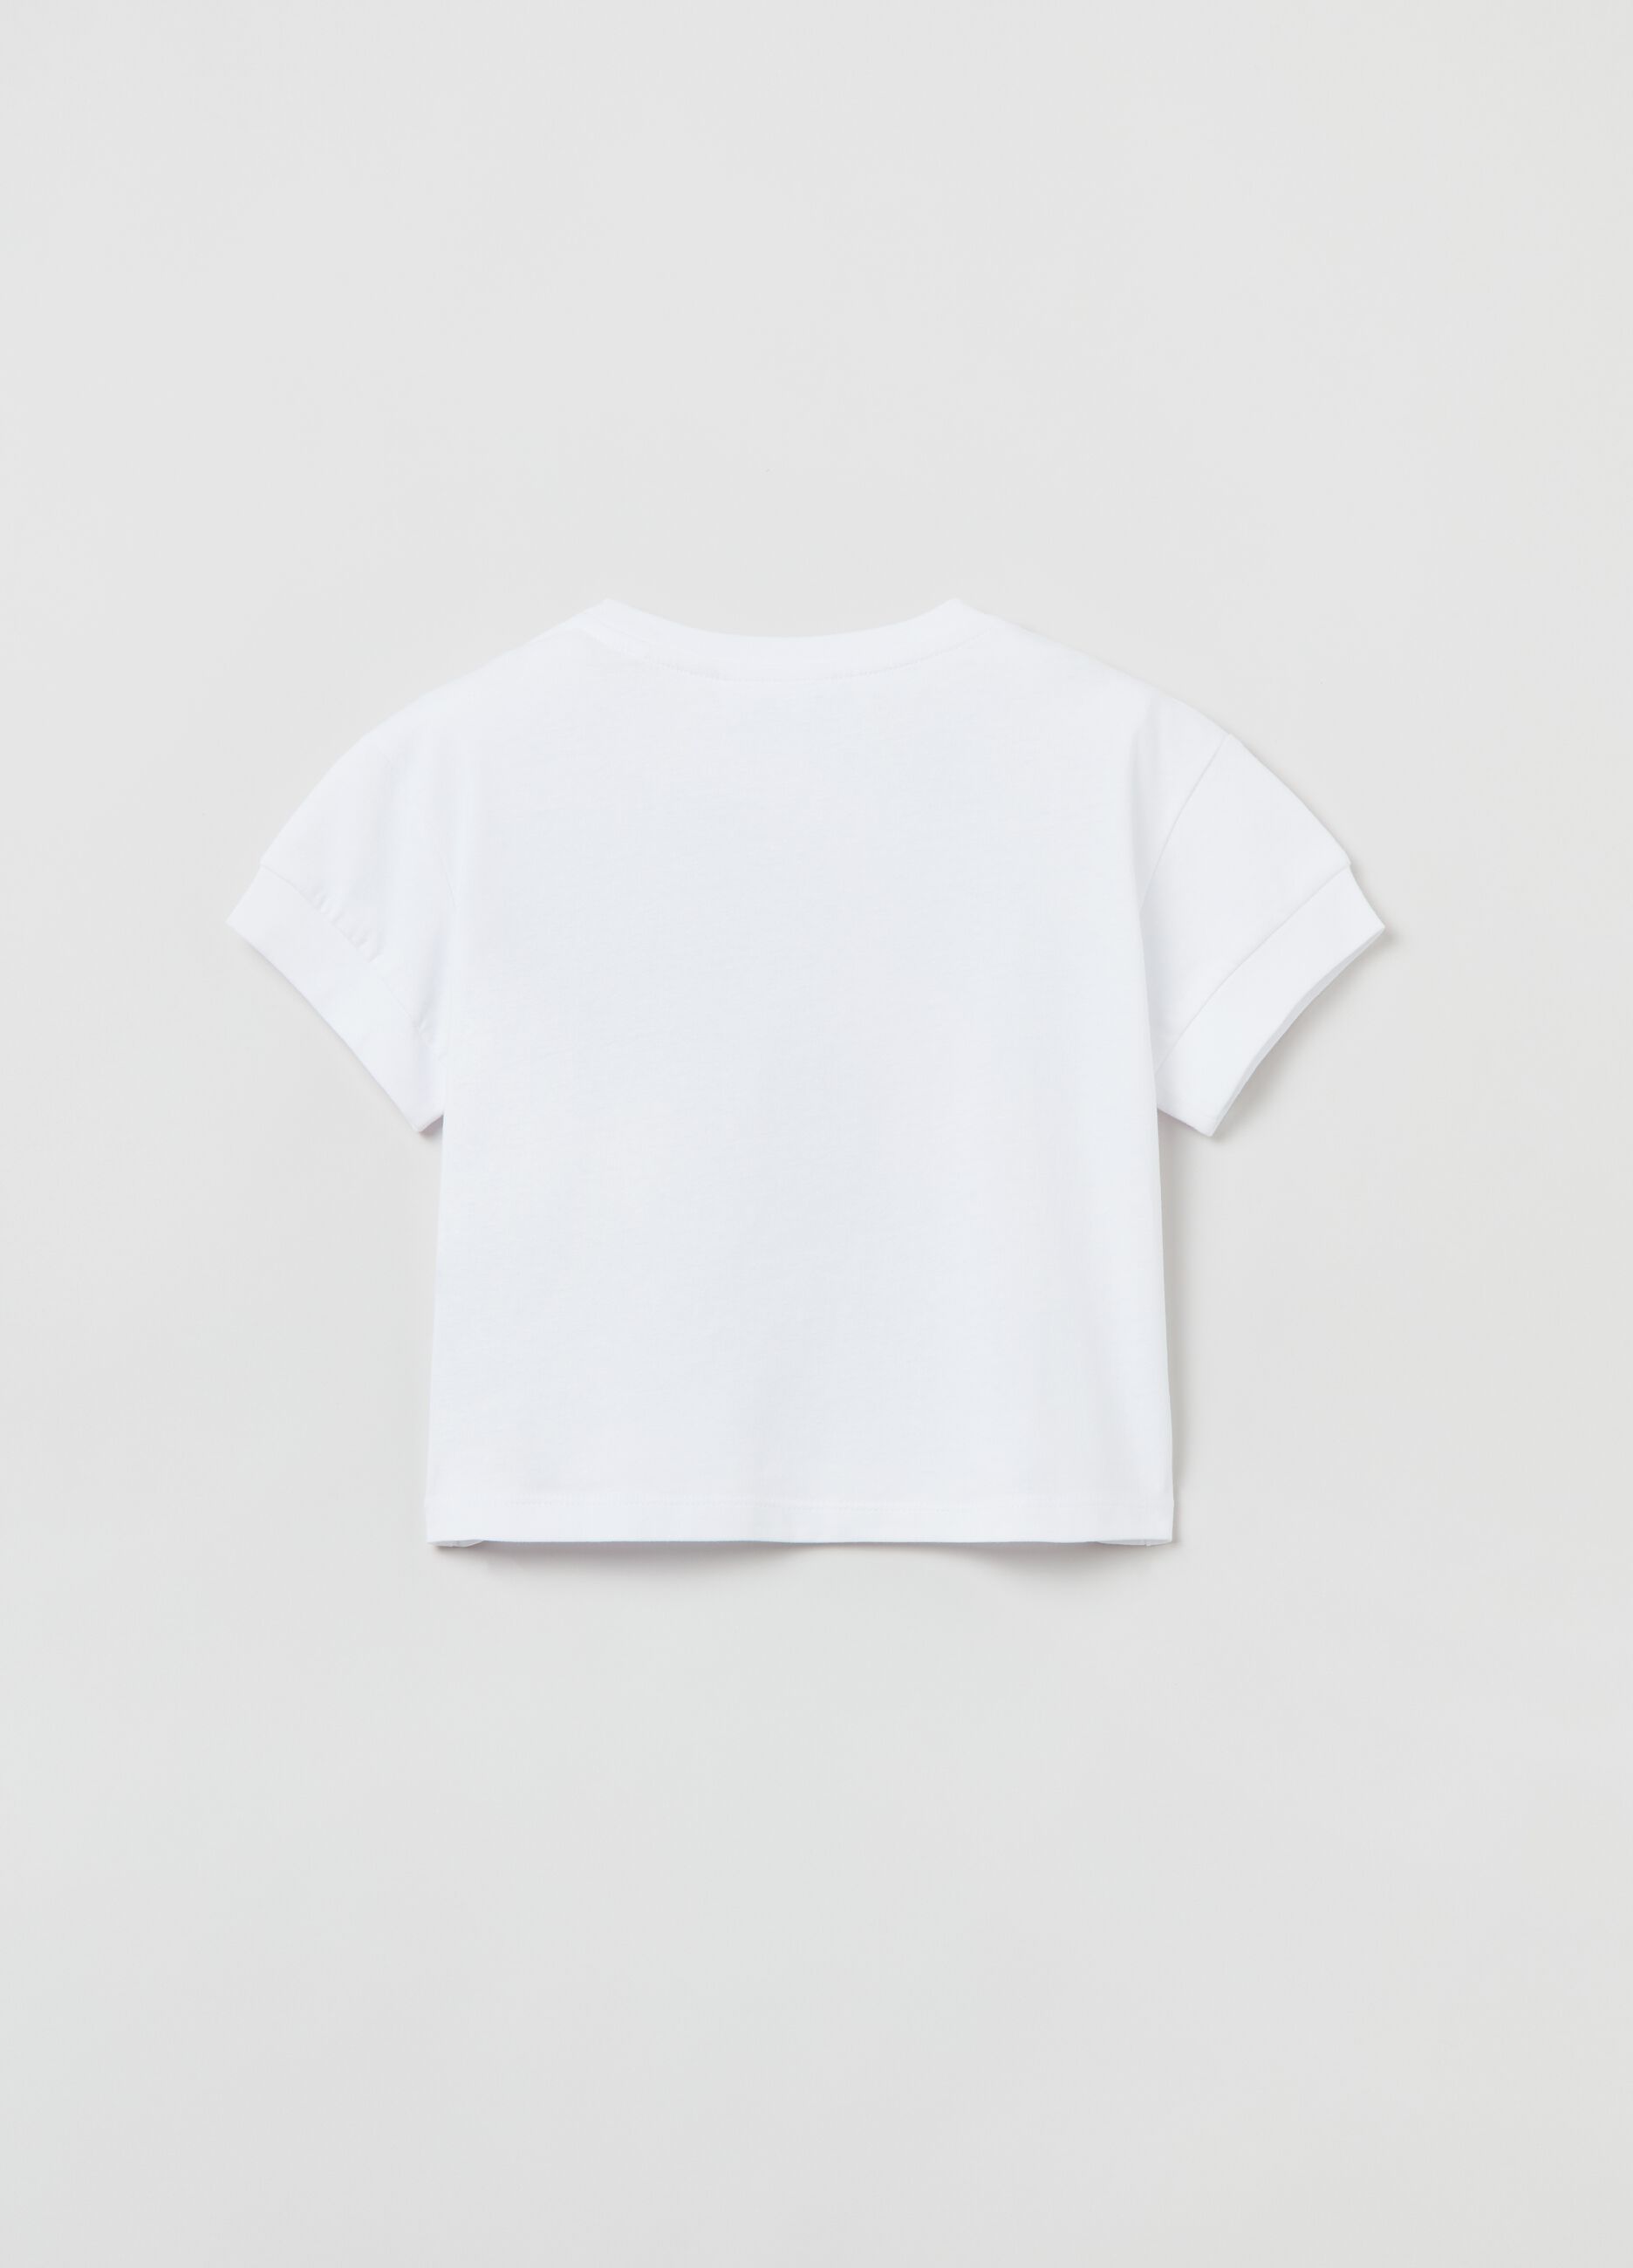 Cotton T-shirt with Pokémon print